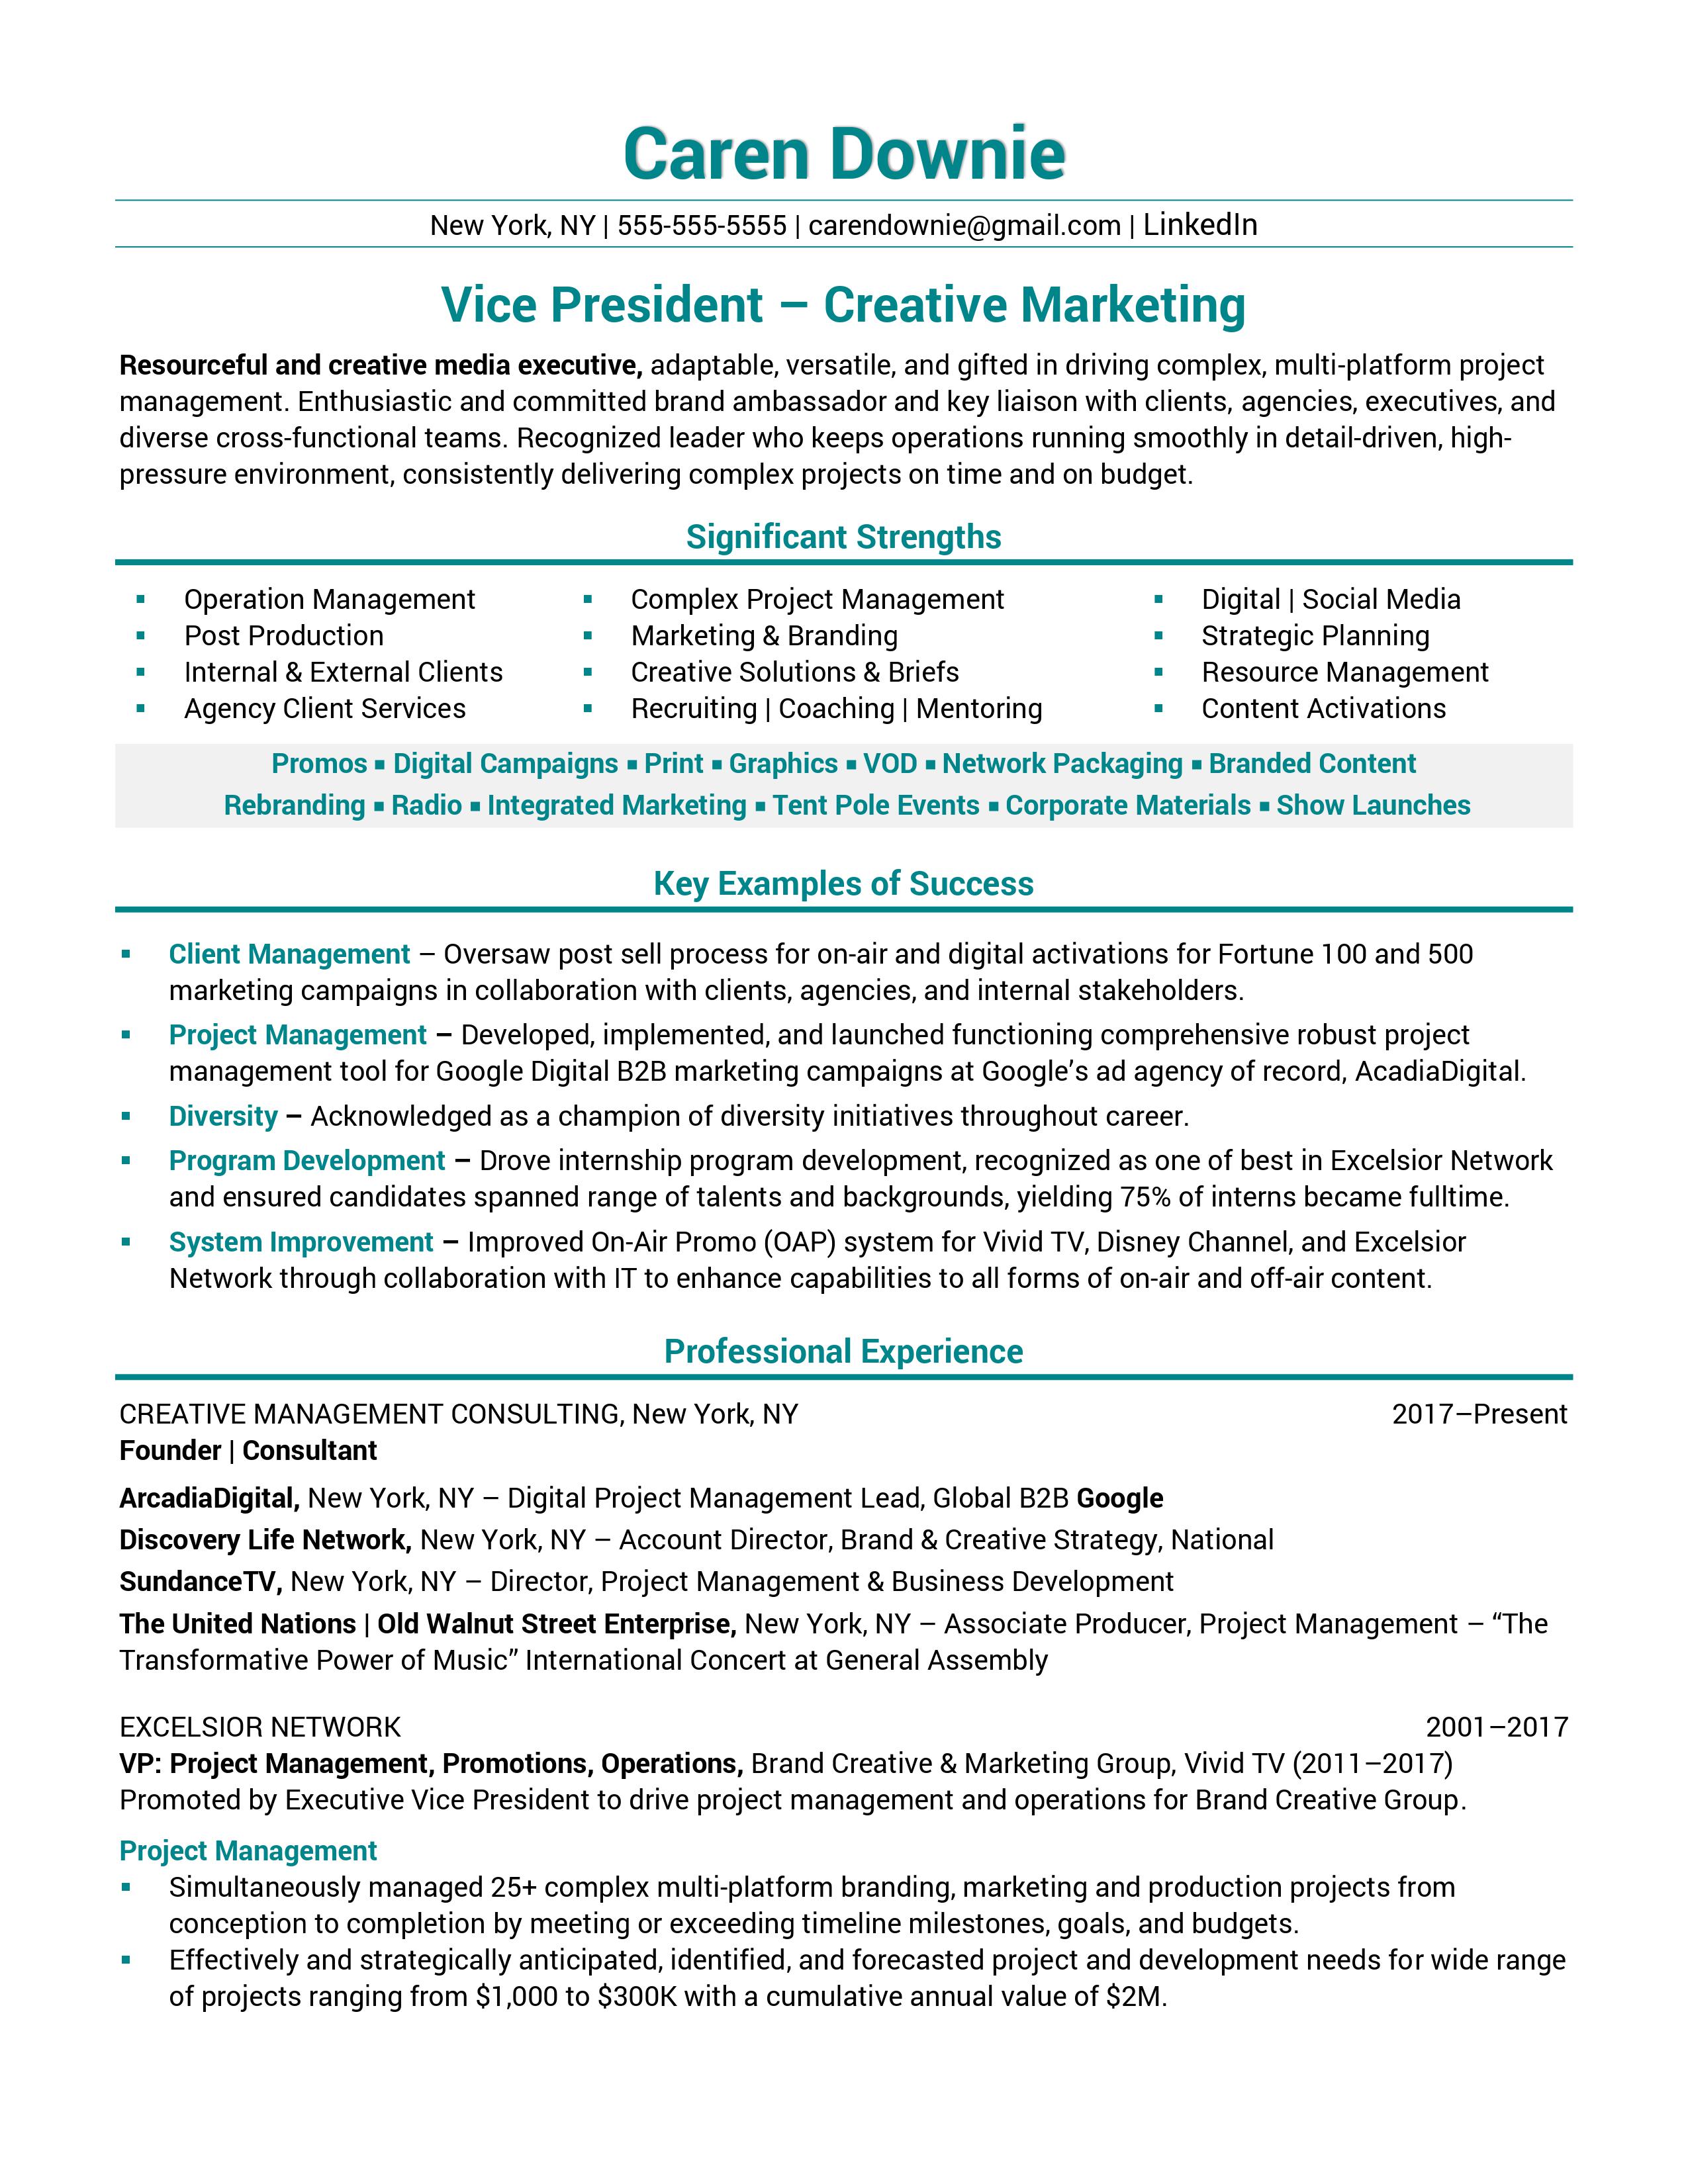 Vice President Creative Marketing Resume Sample 1